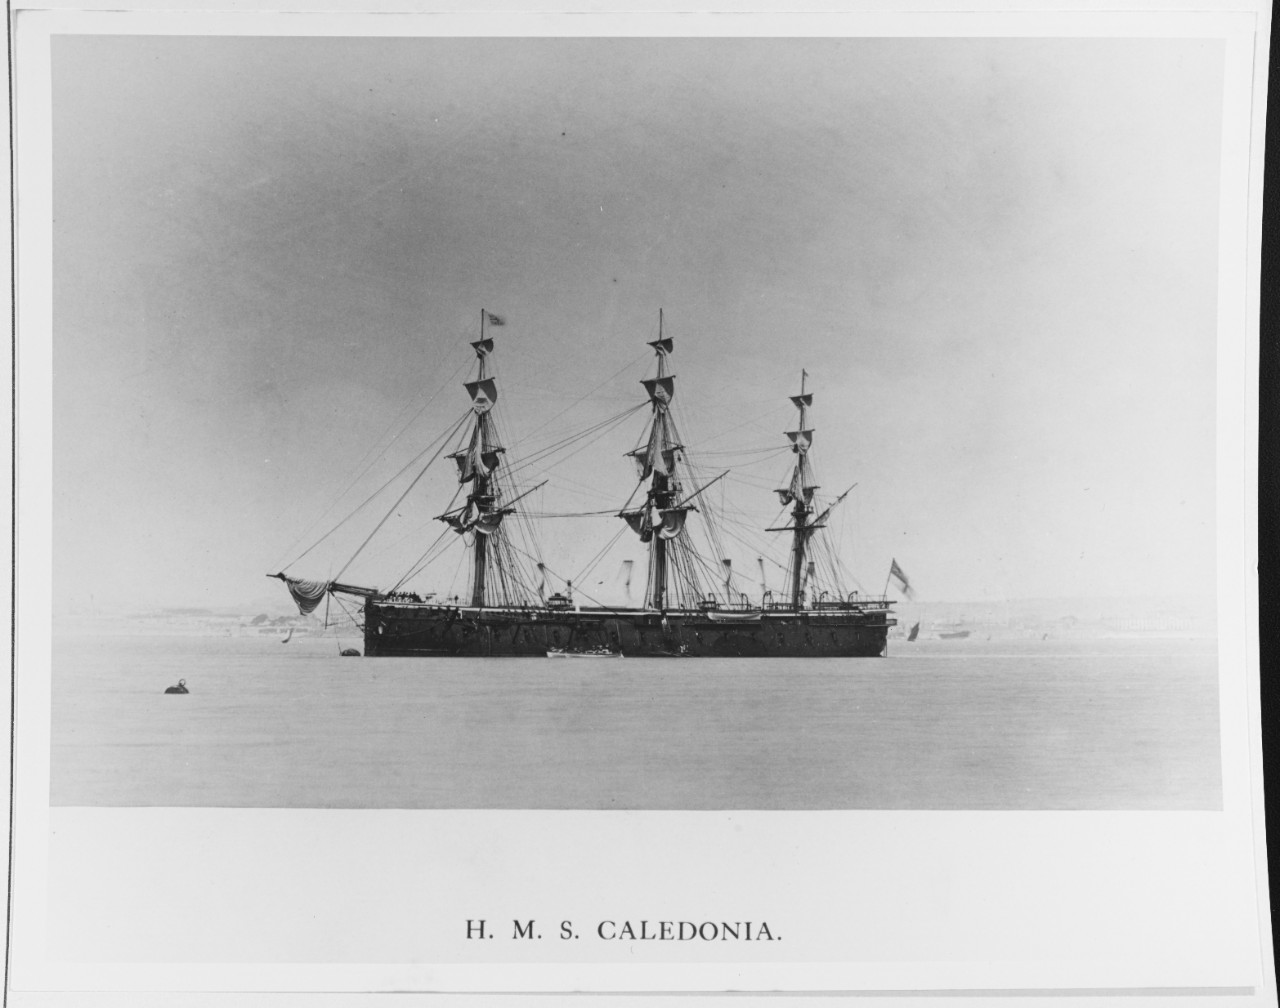 HMS CALEDONIA (BRITISH BATTLESHIP, 1862)